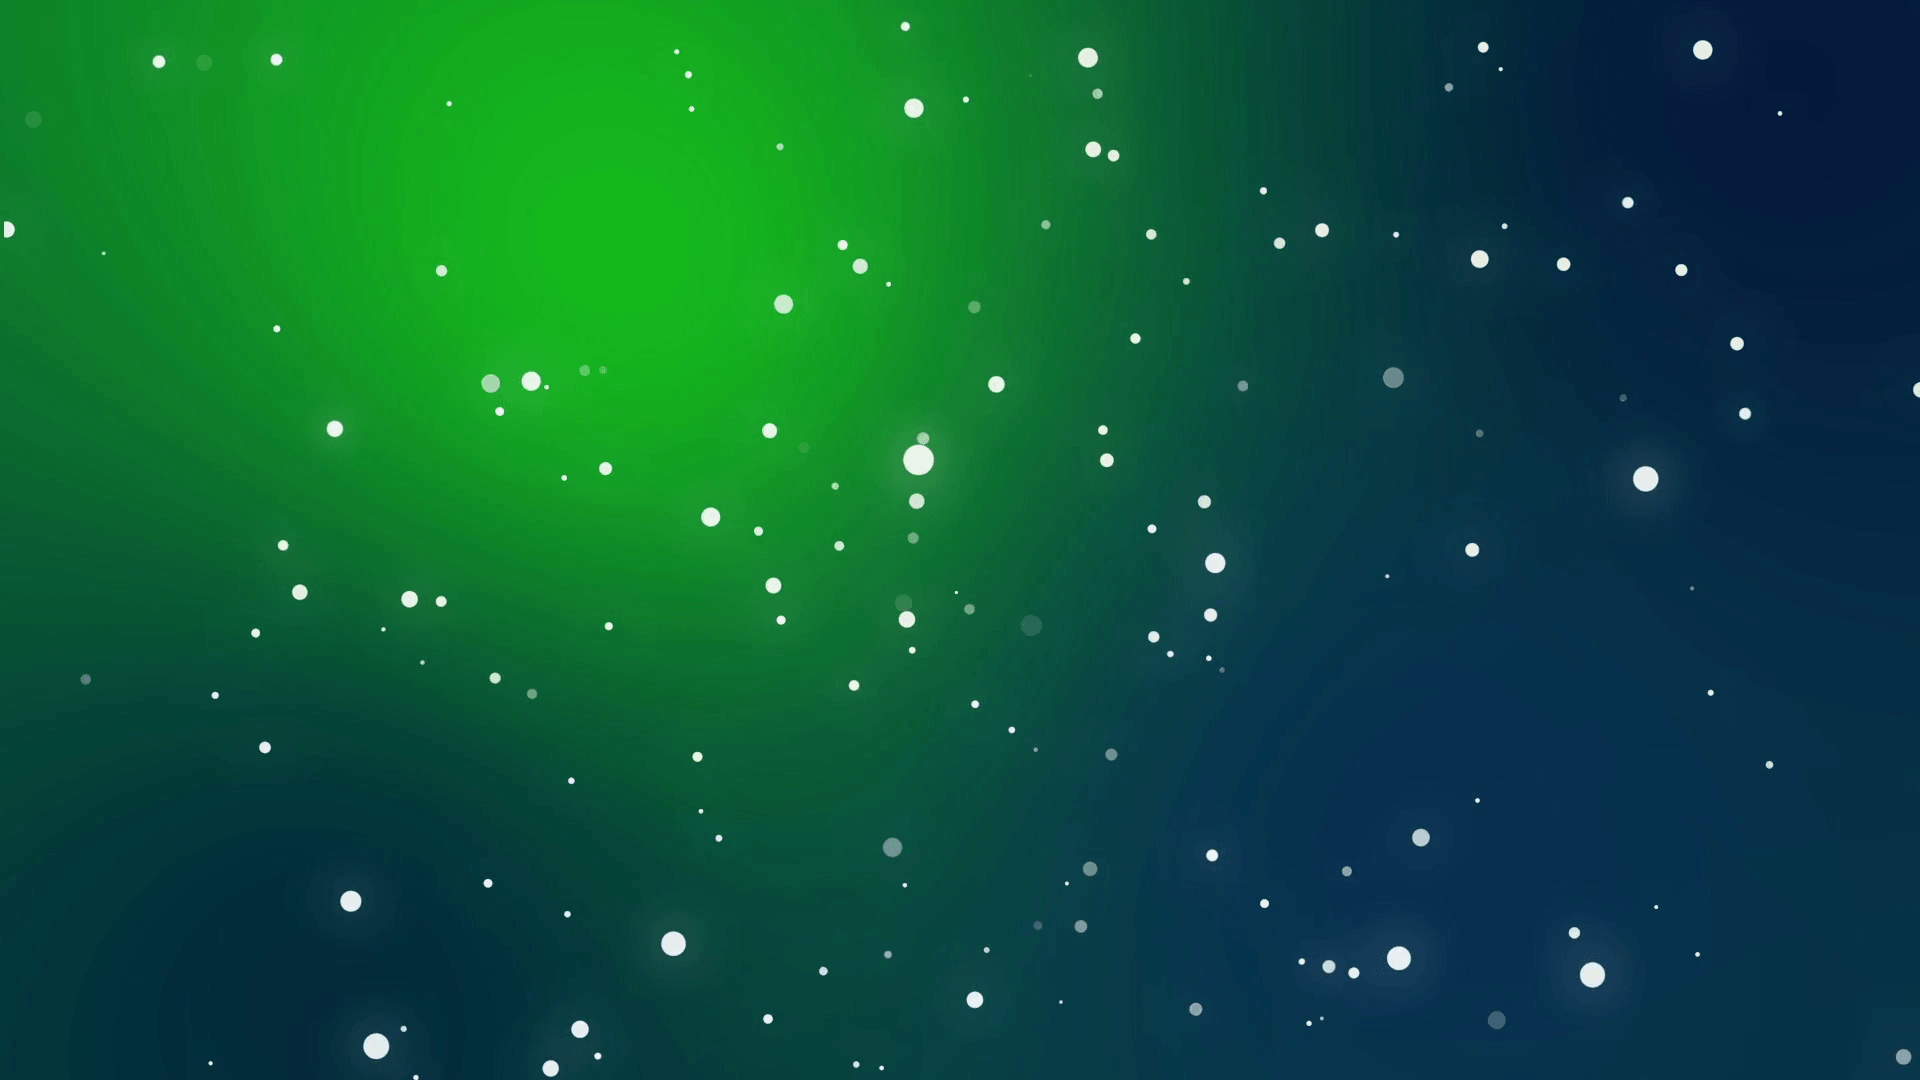 Night sky full of stars animation made of sparkly light dot